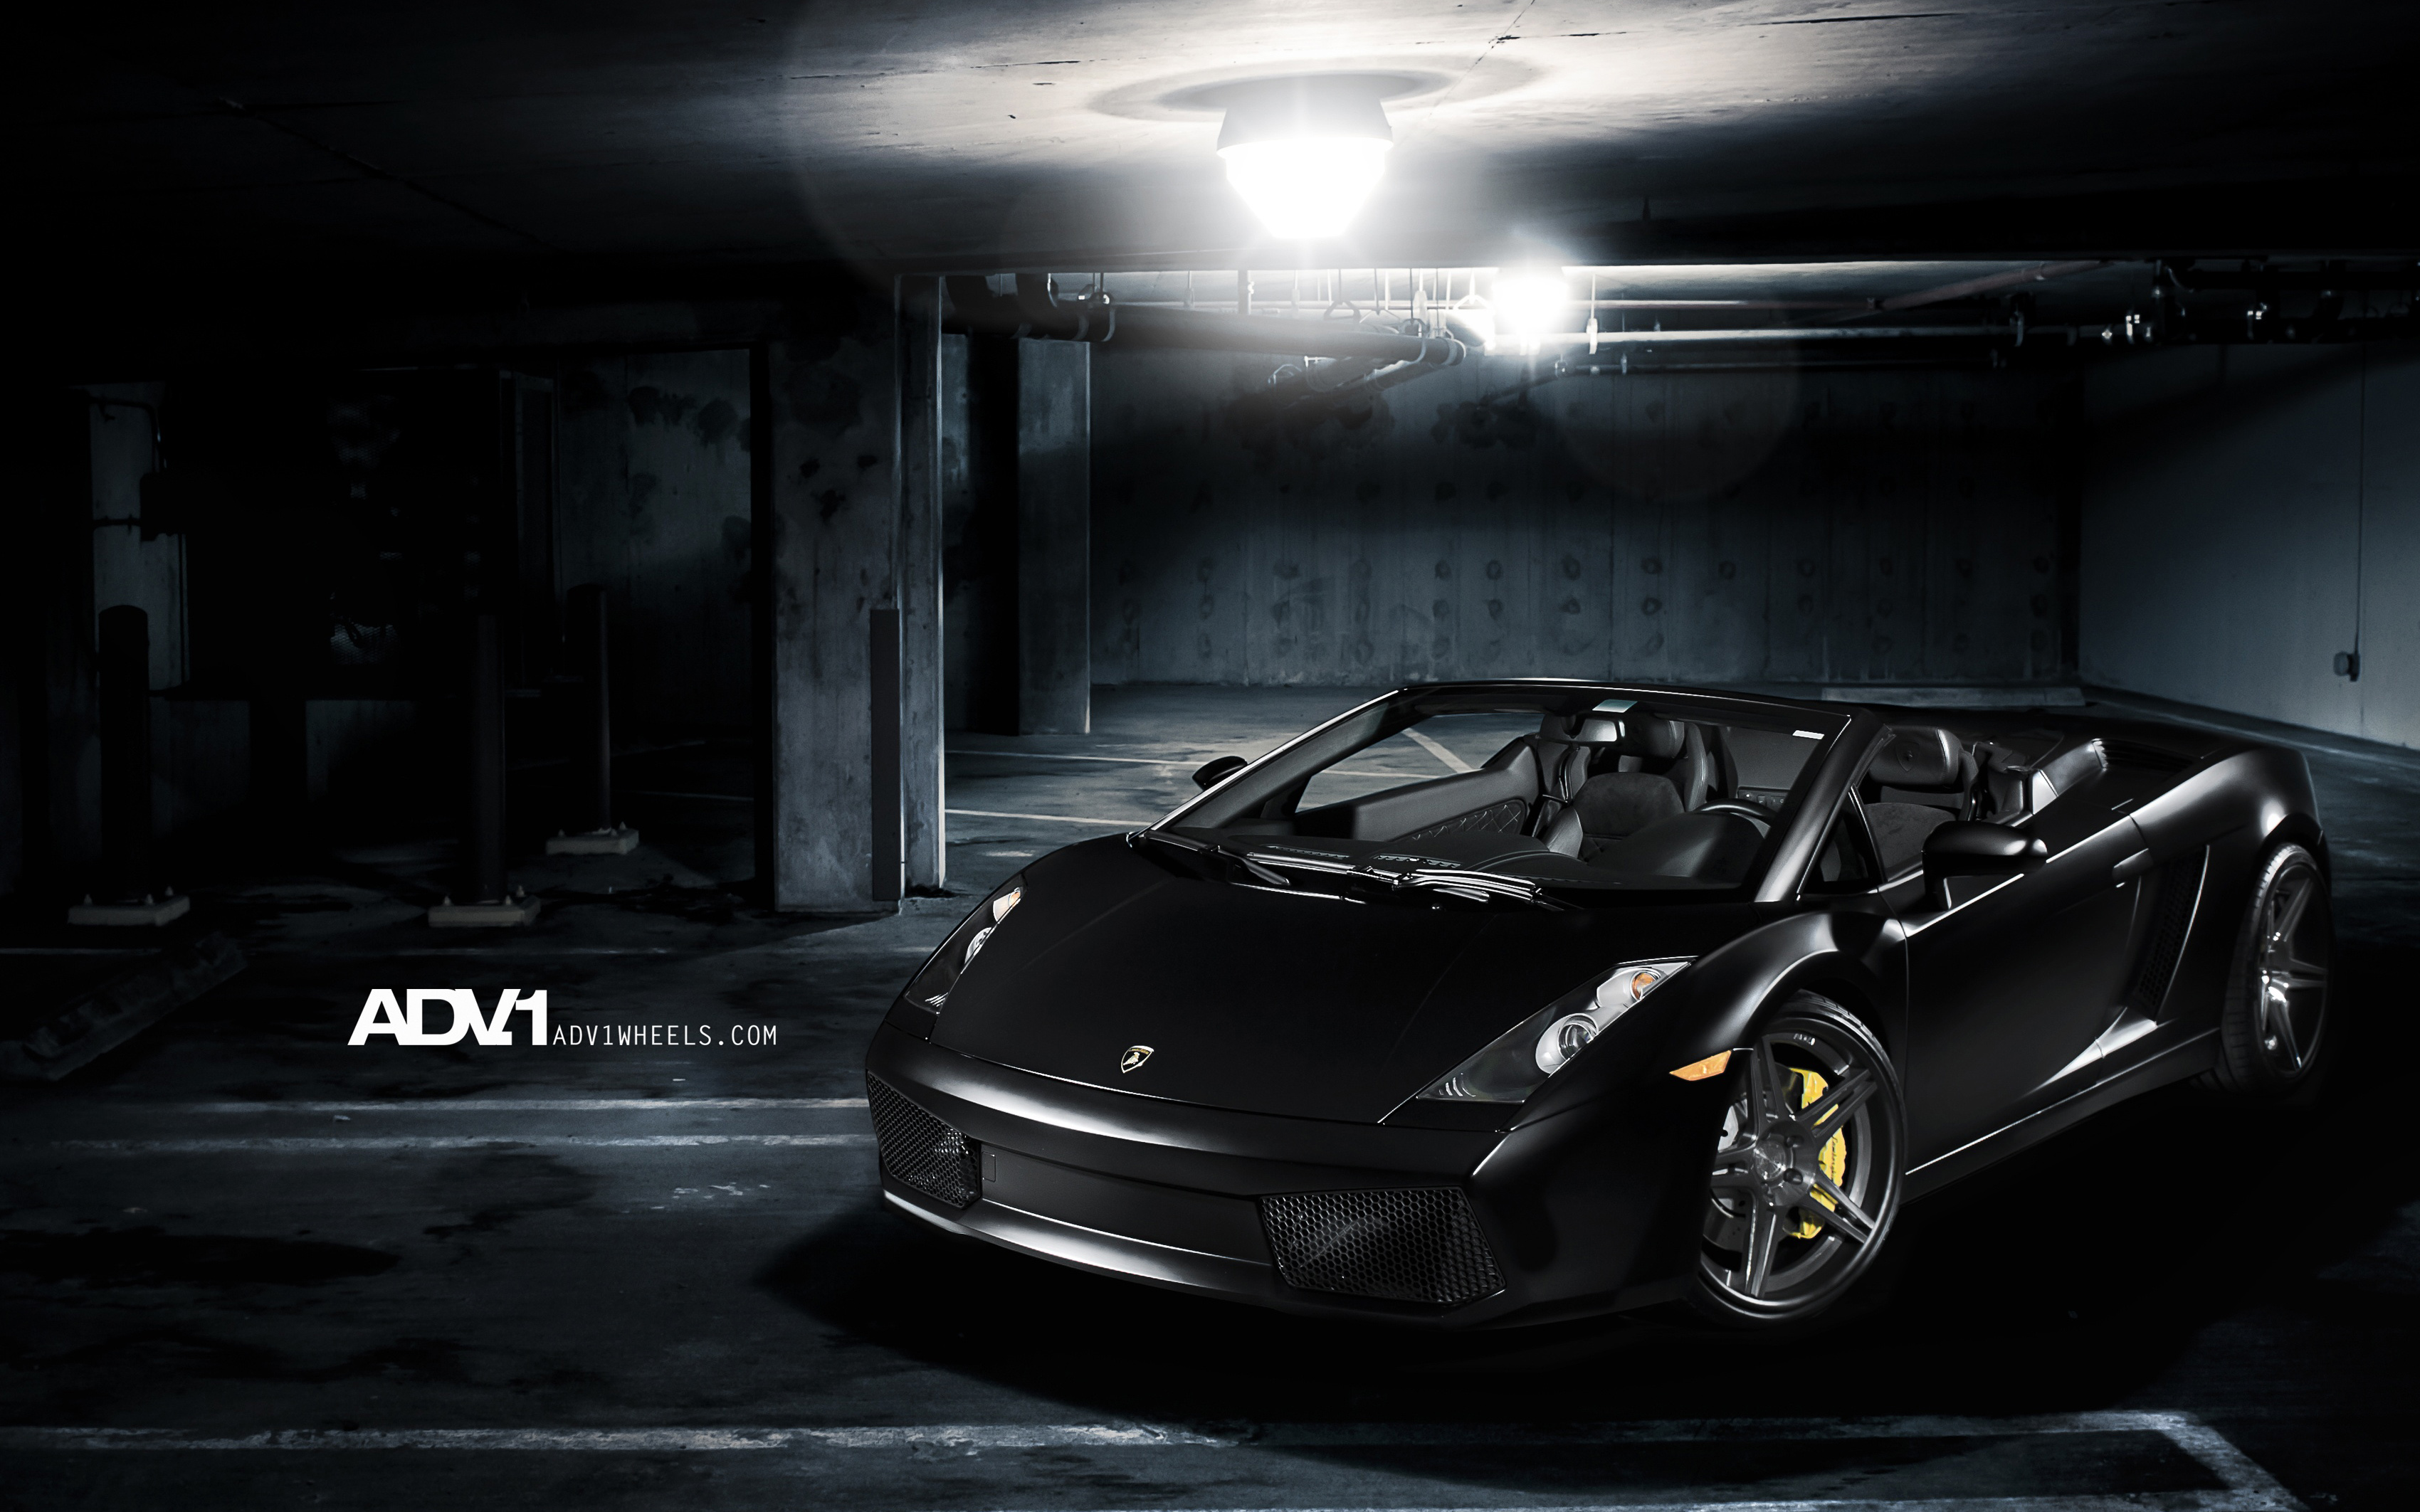 Lamborghini Gallardo Spyder Black Wallpaper Image Galleries Imagekb